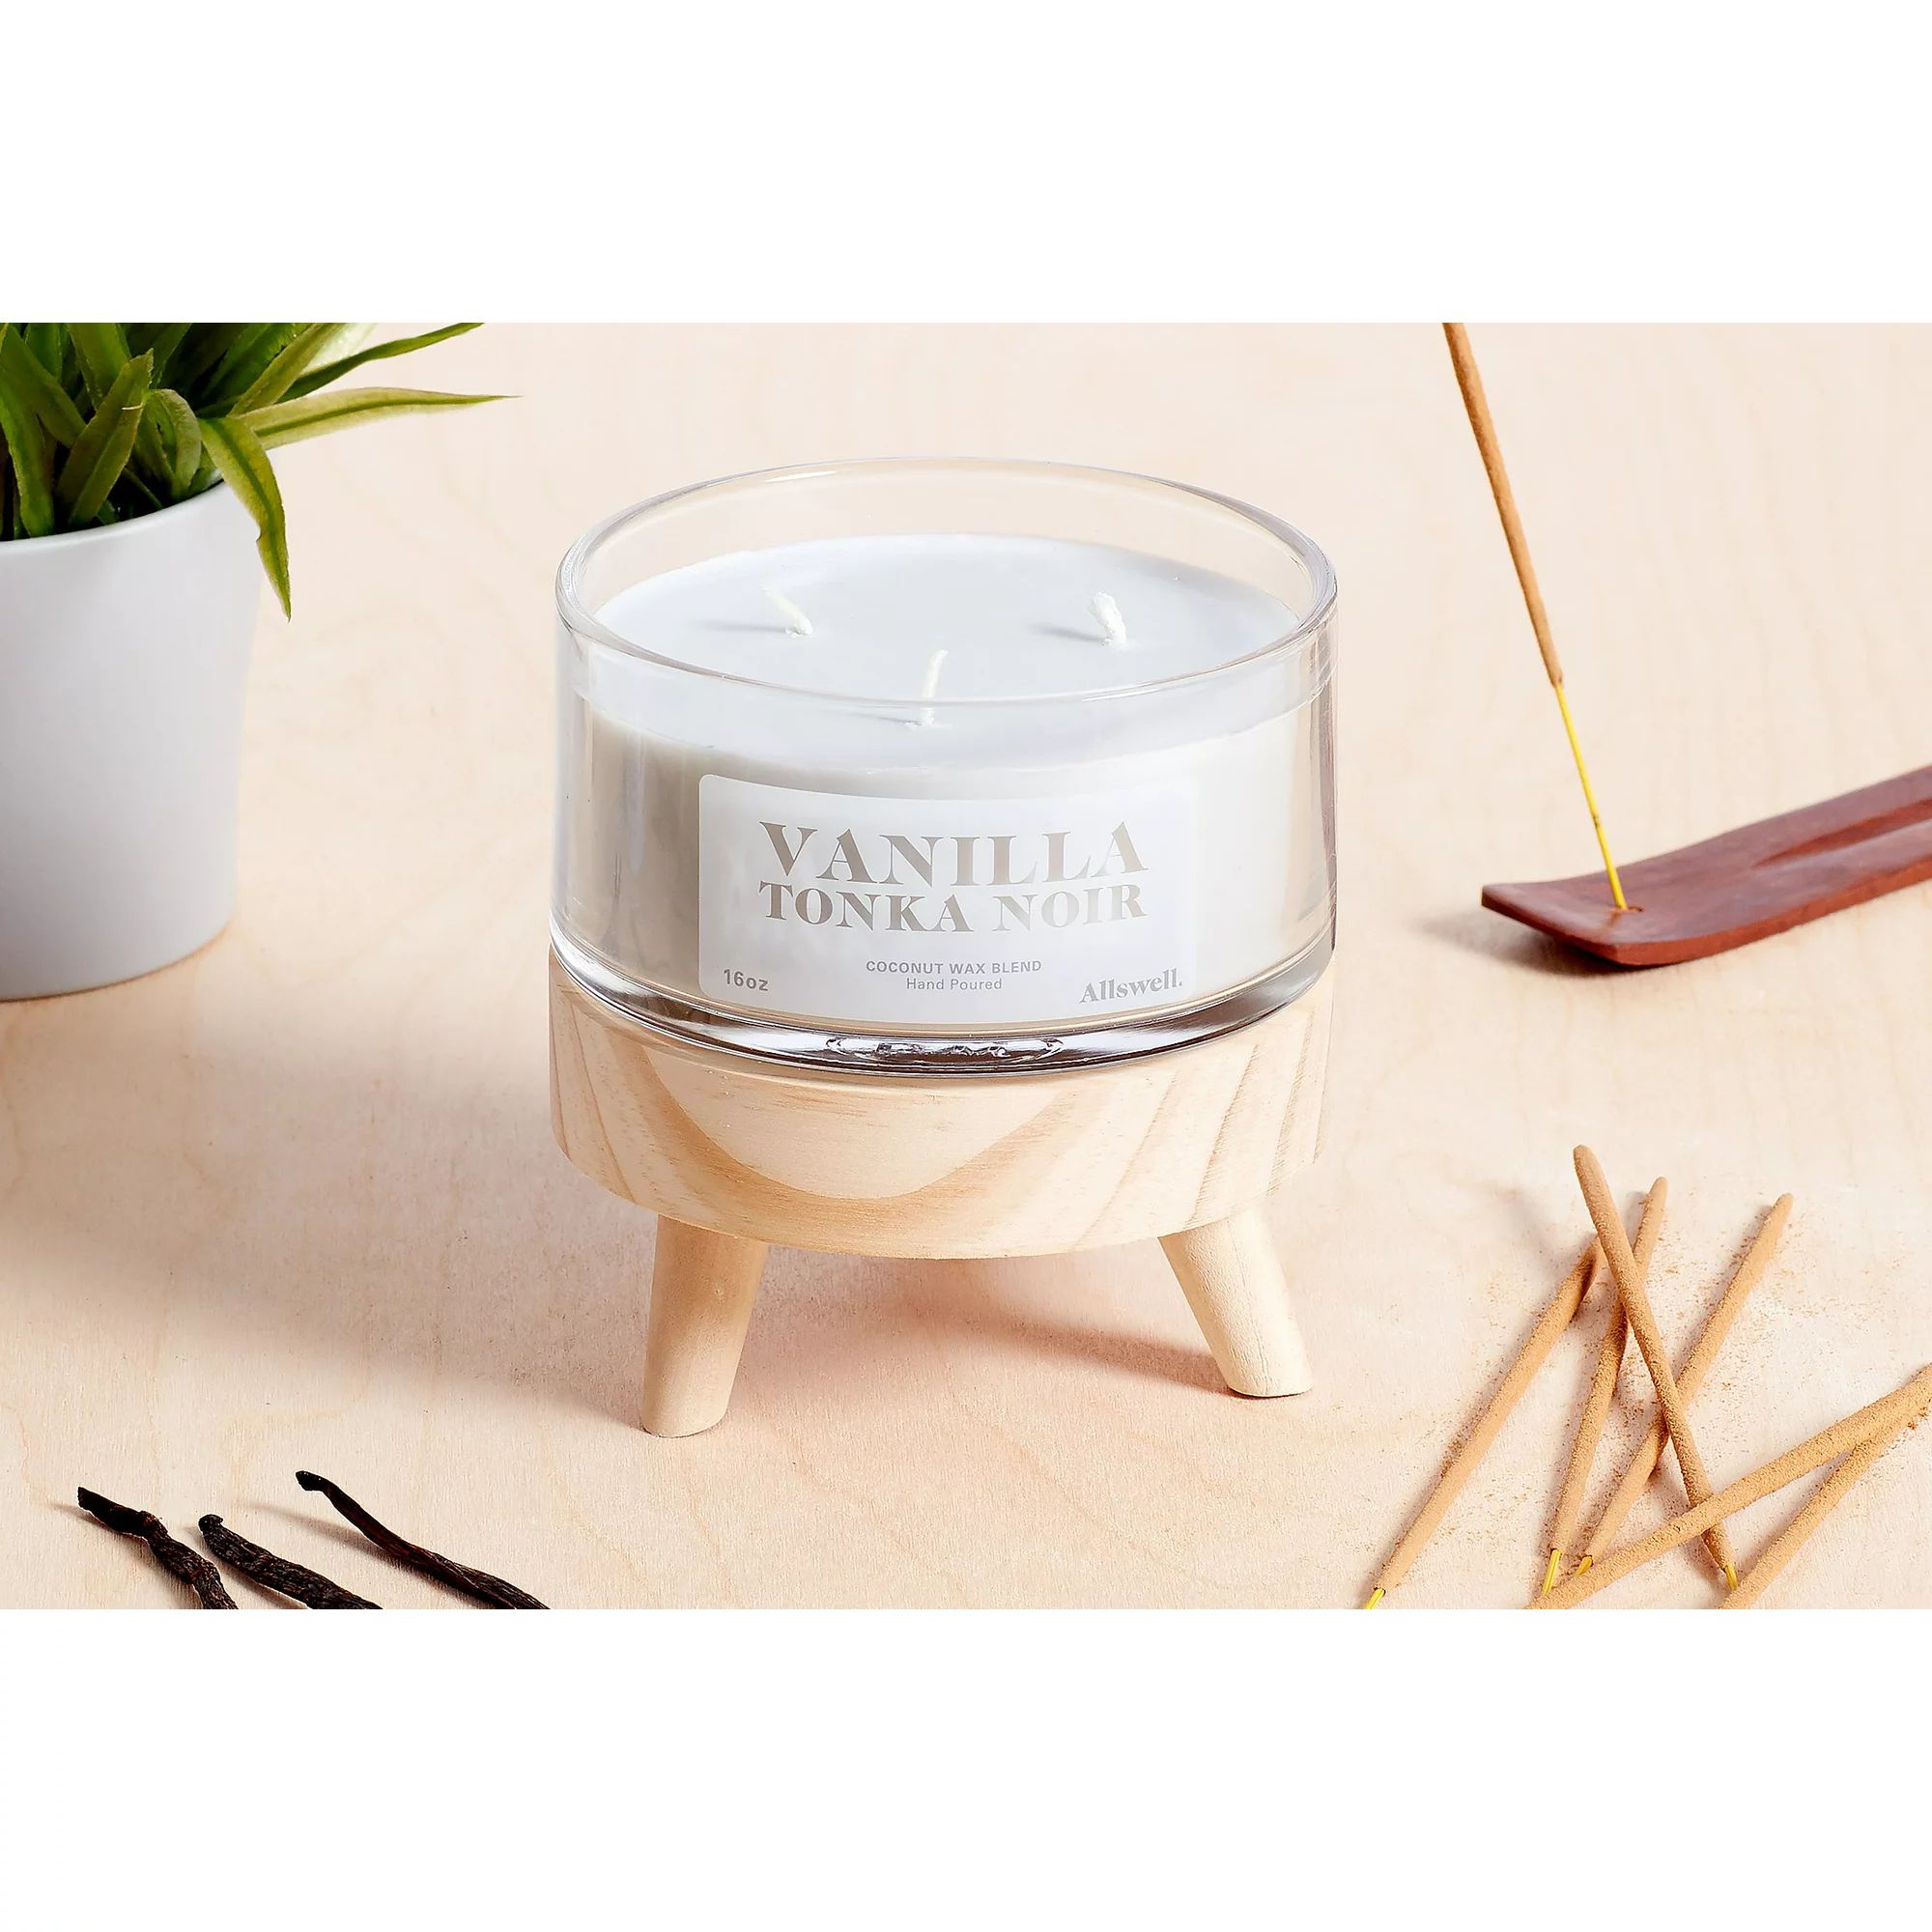 Allswell Vanilla Tonka Noir Coconut Wax Blend Candle, 16 oz | Walmart (US)